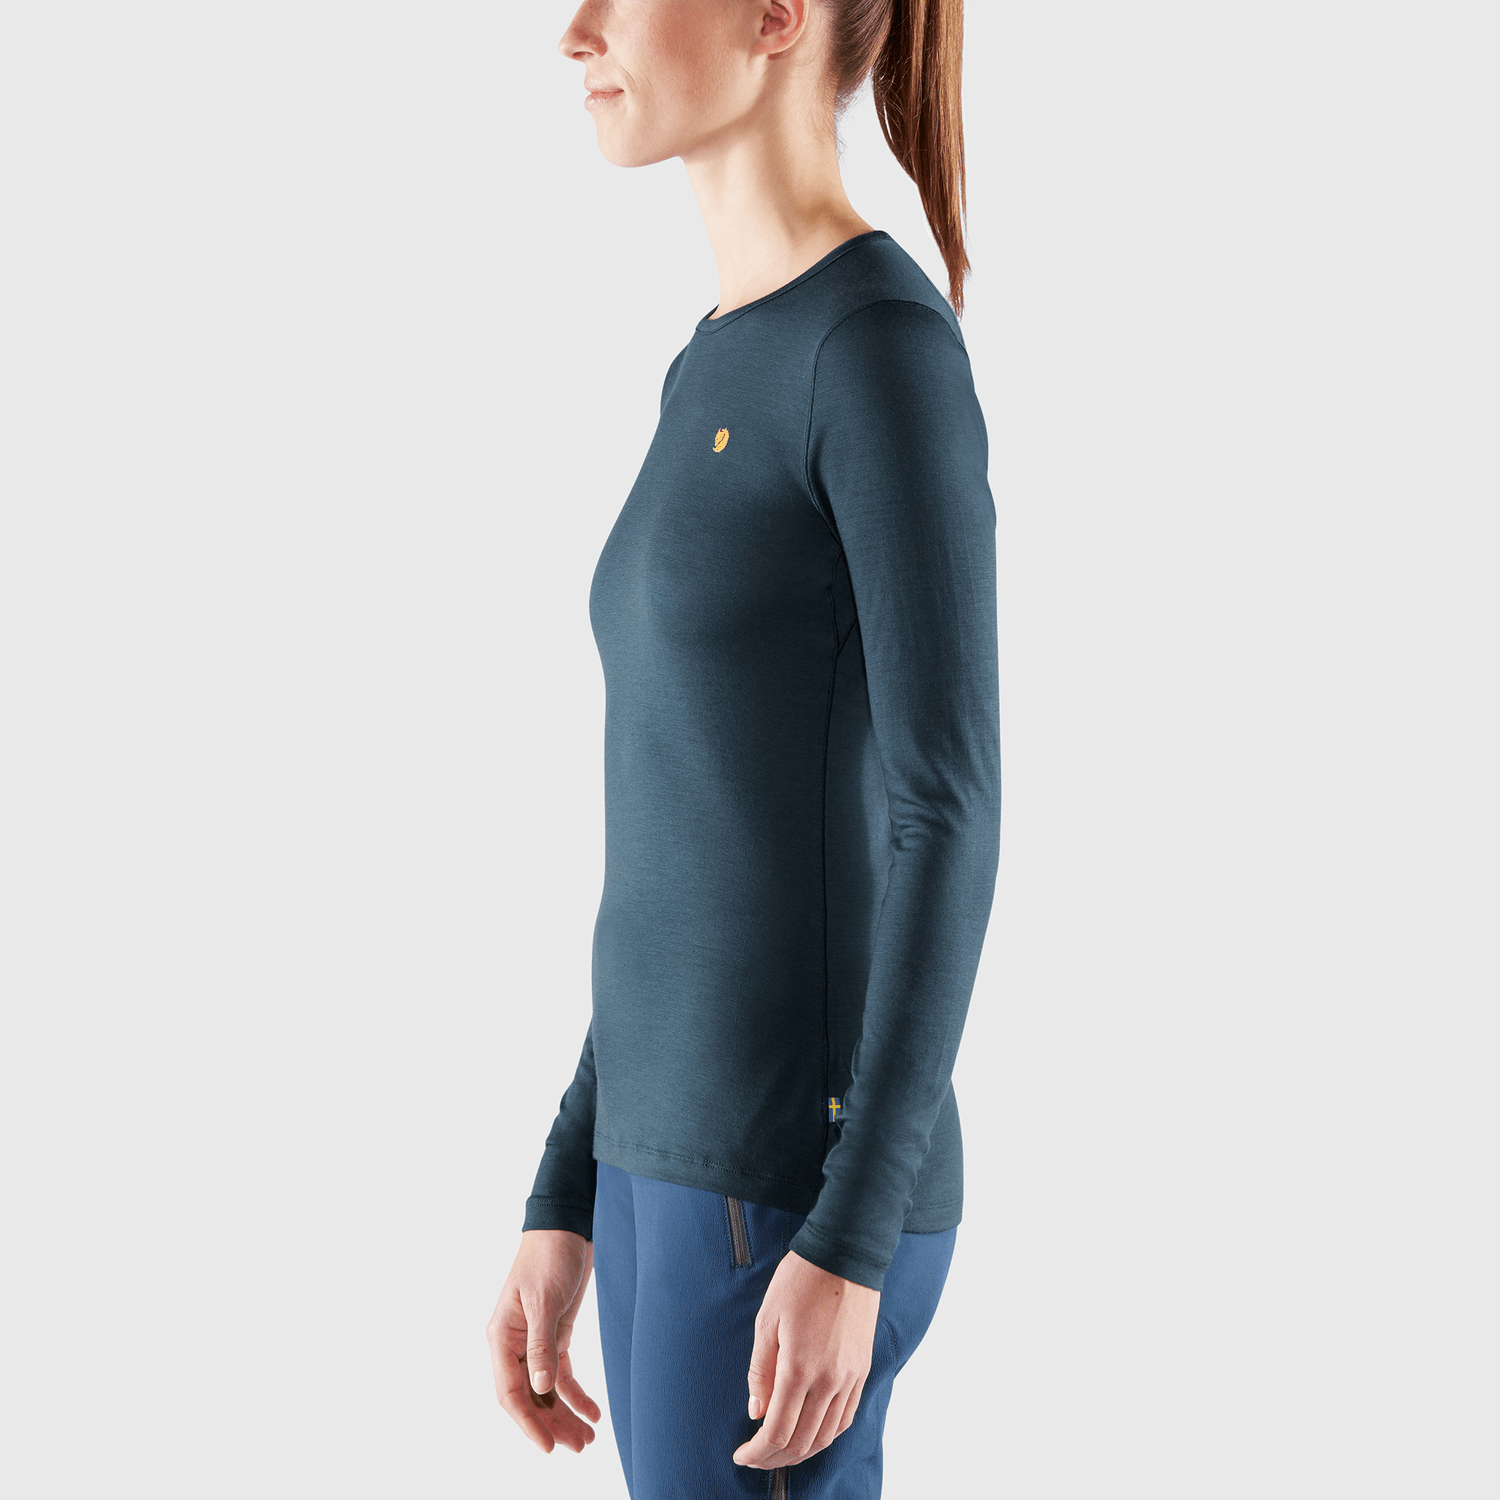 Fjällräven - W's Bergtagen Thinwool LS Shirt - 100% Merino Wool - Weekendbee - sustainable sportswear